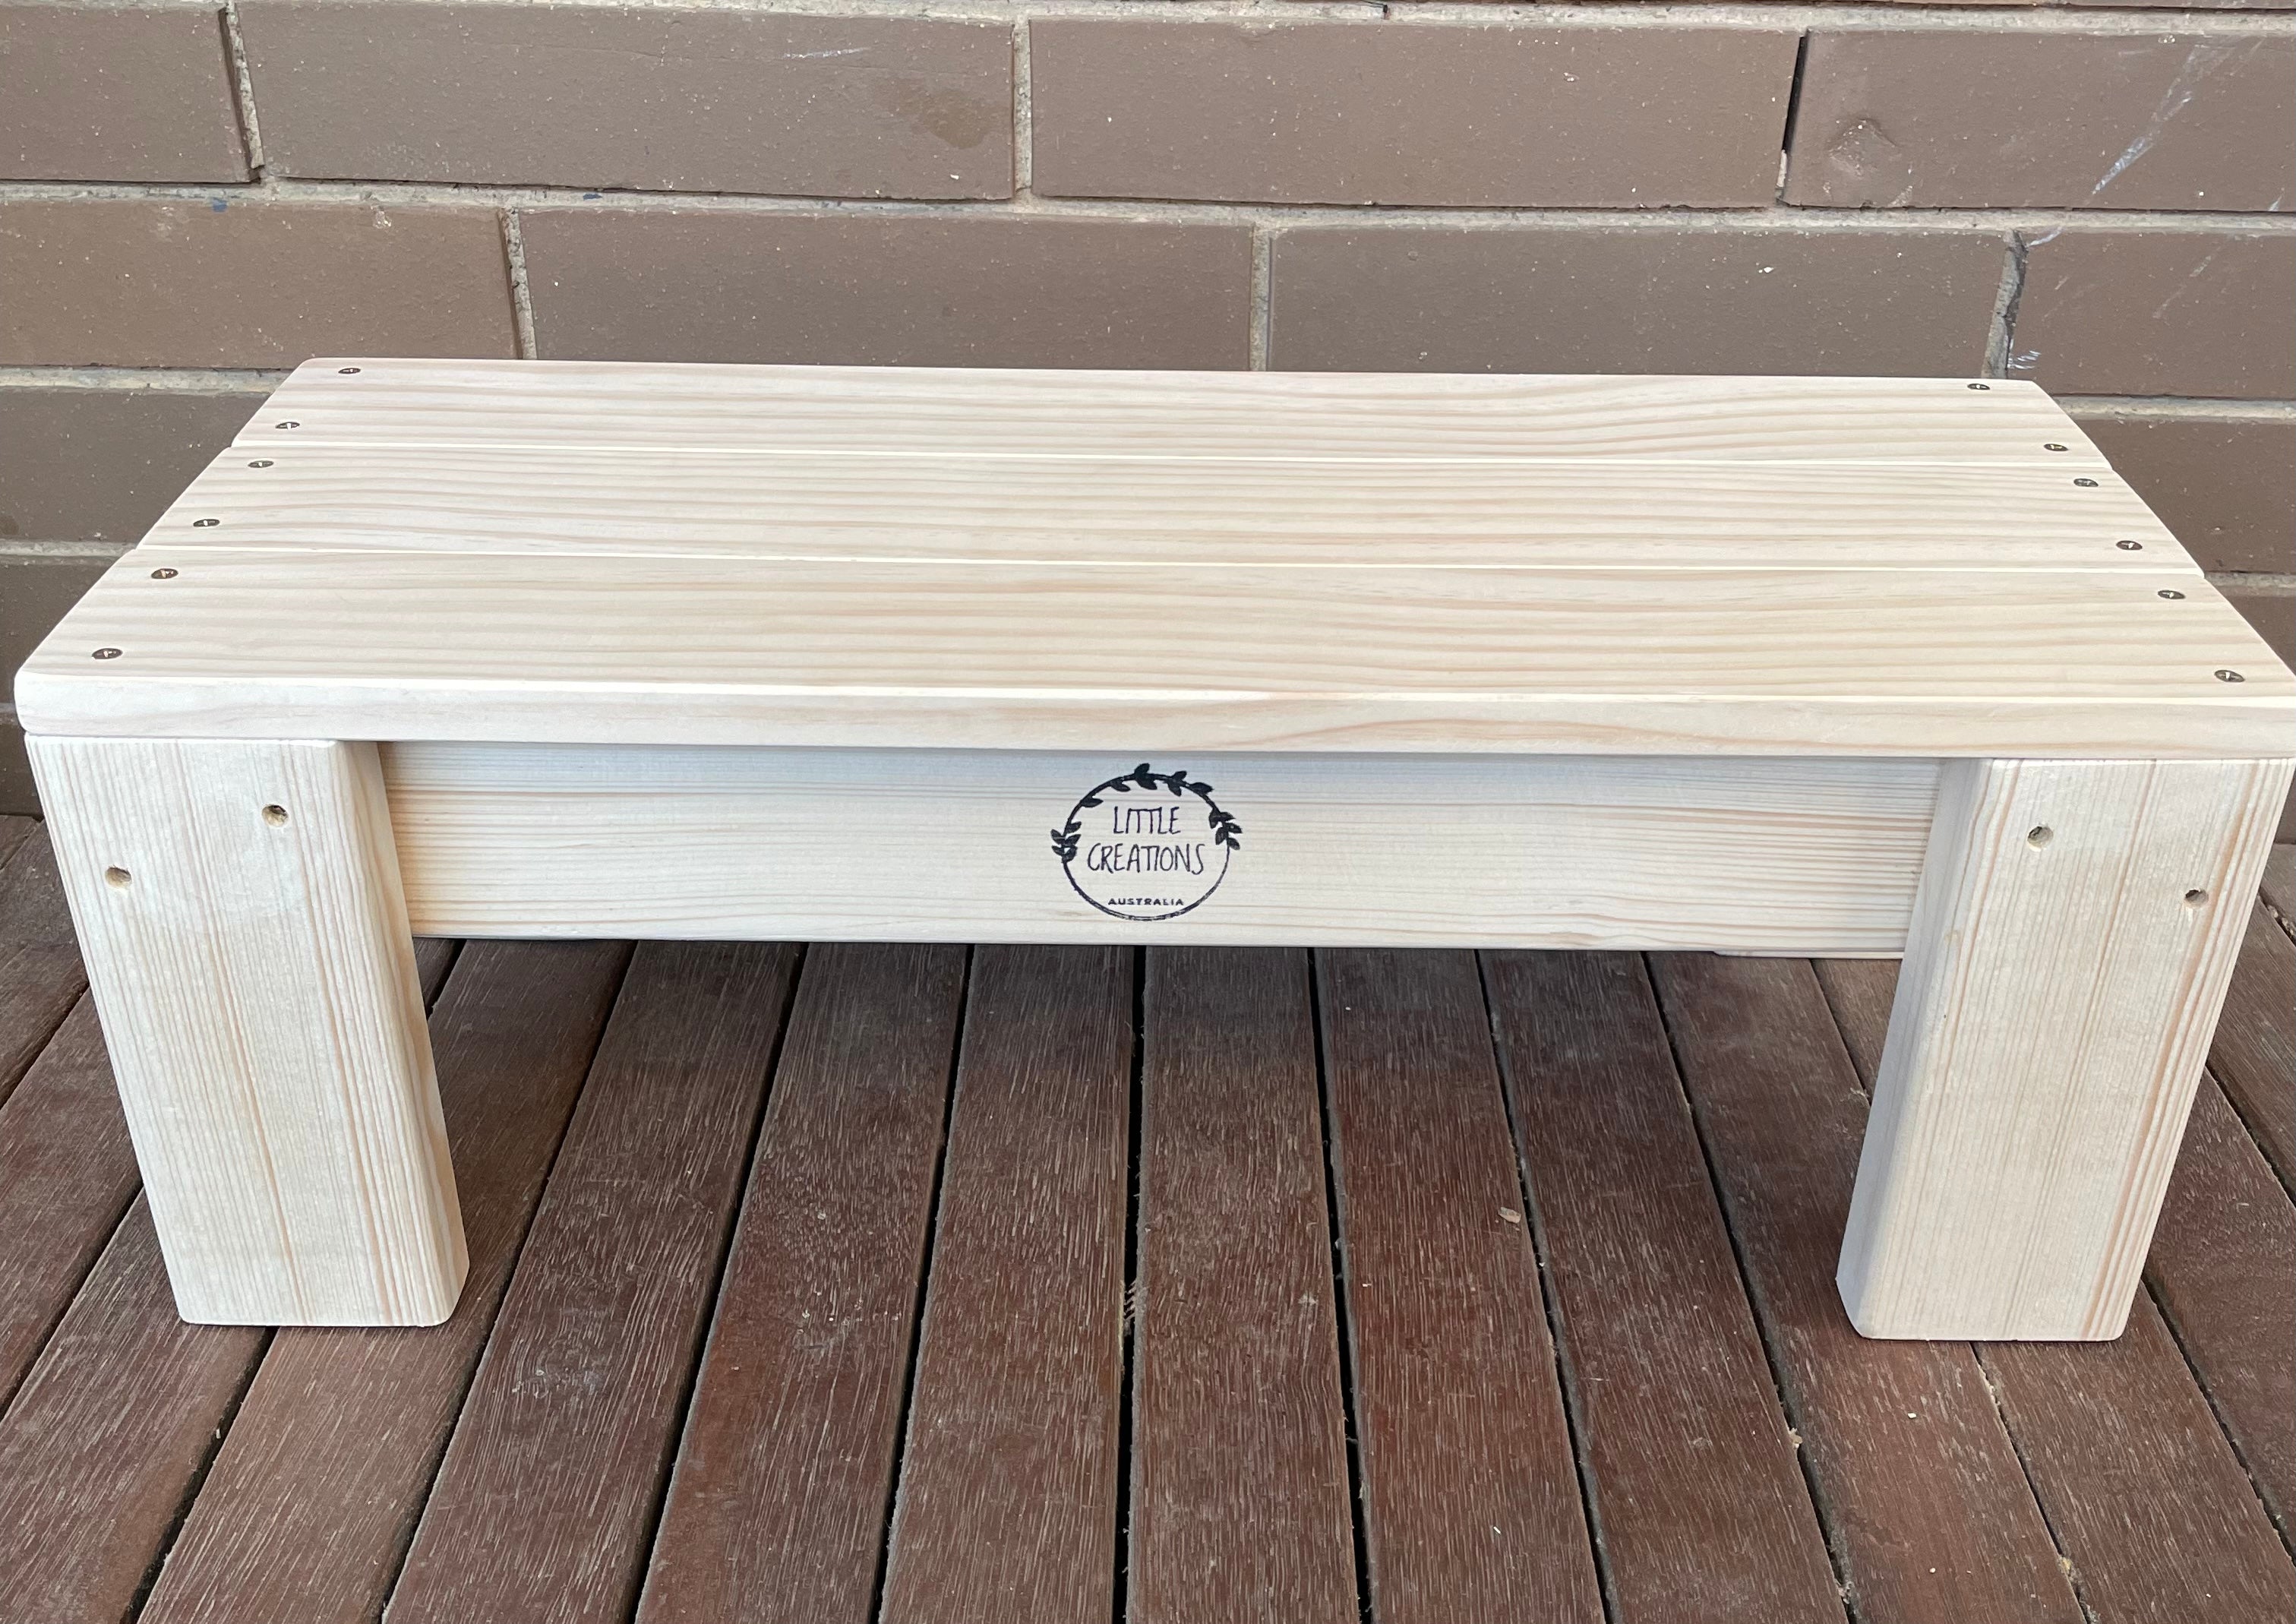 Kids Wooden Bench Seat - medium